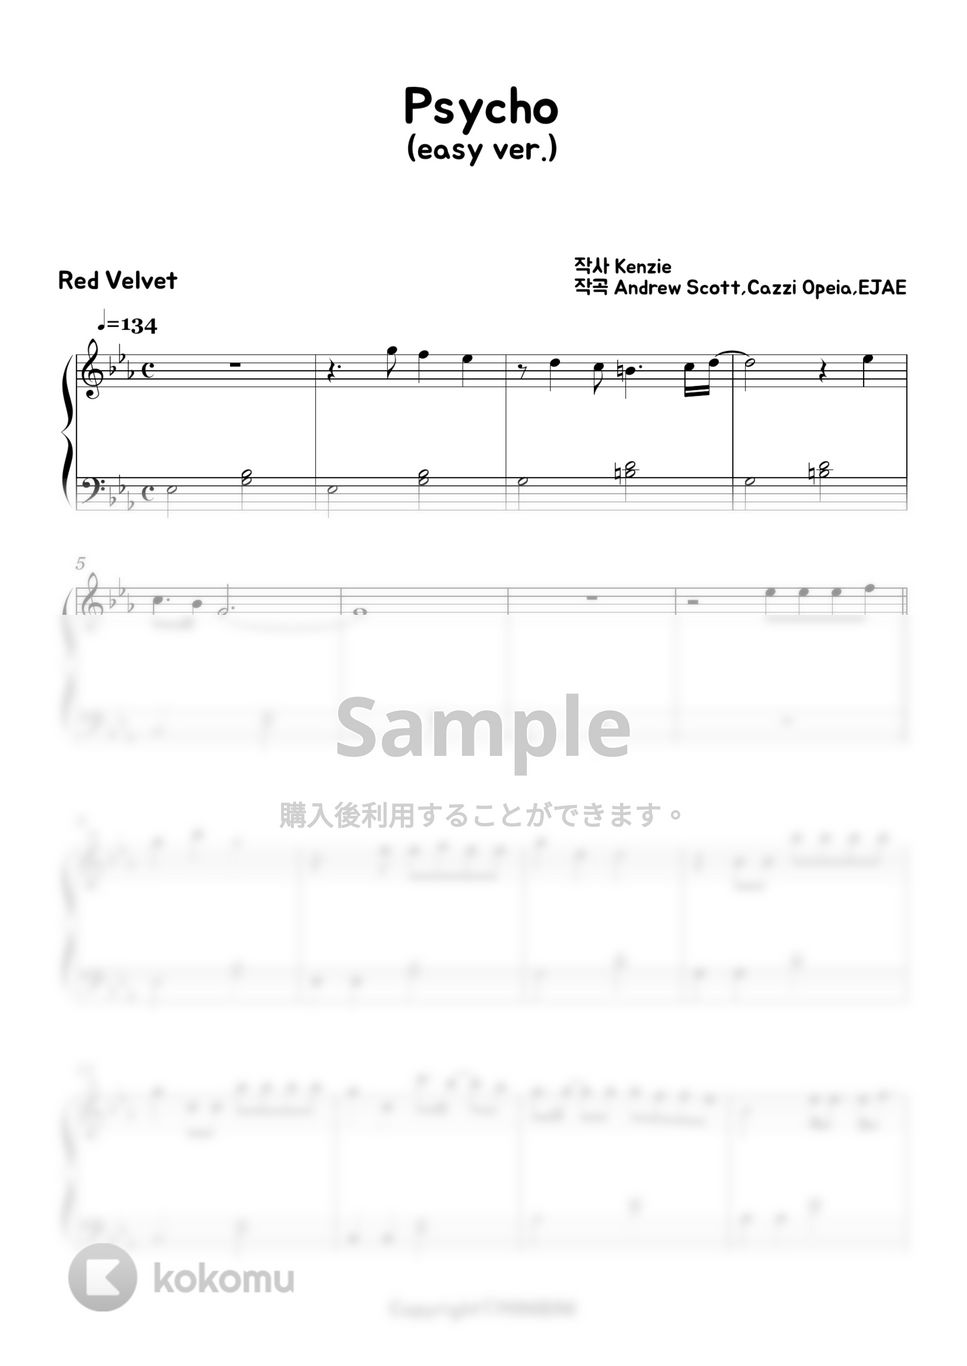 Red Velvet - PSYCHO (Easy ver.) by MINIBINI